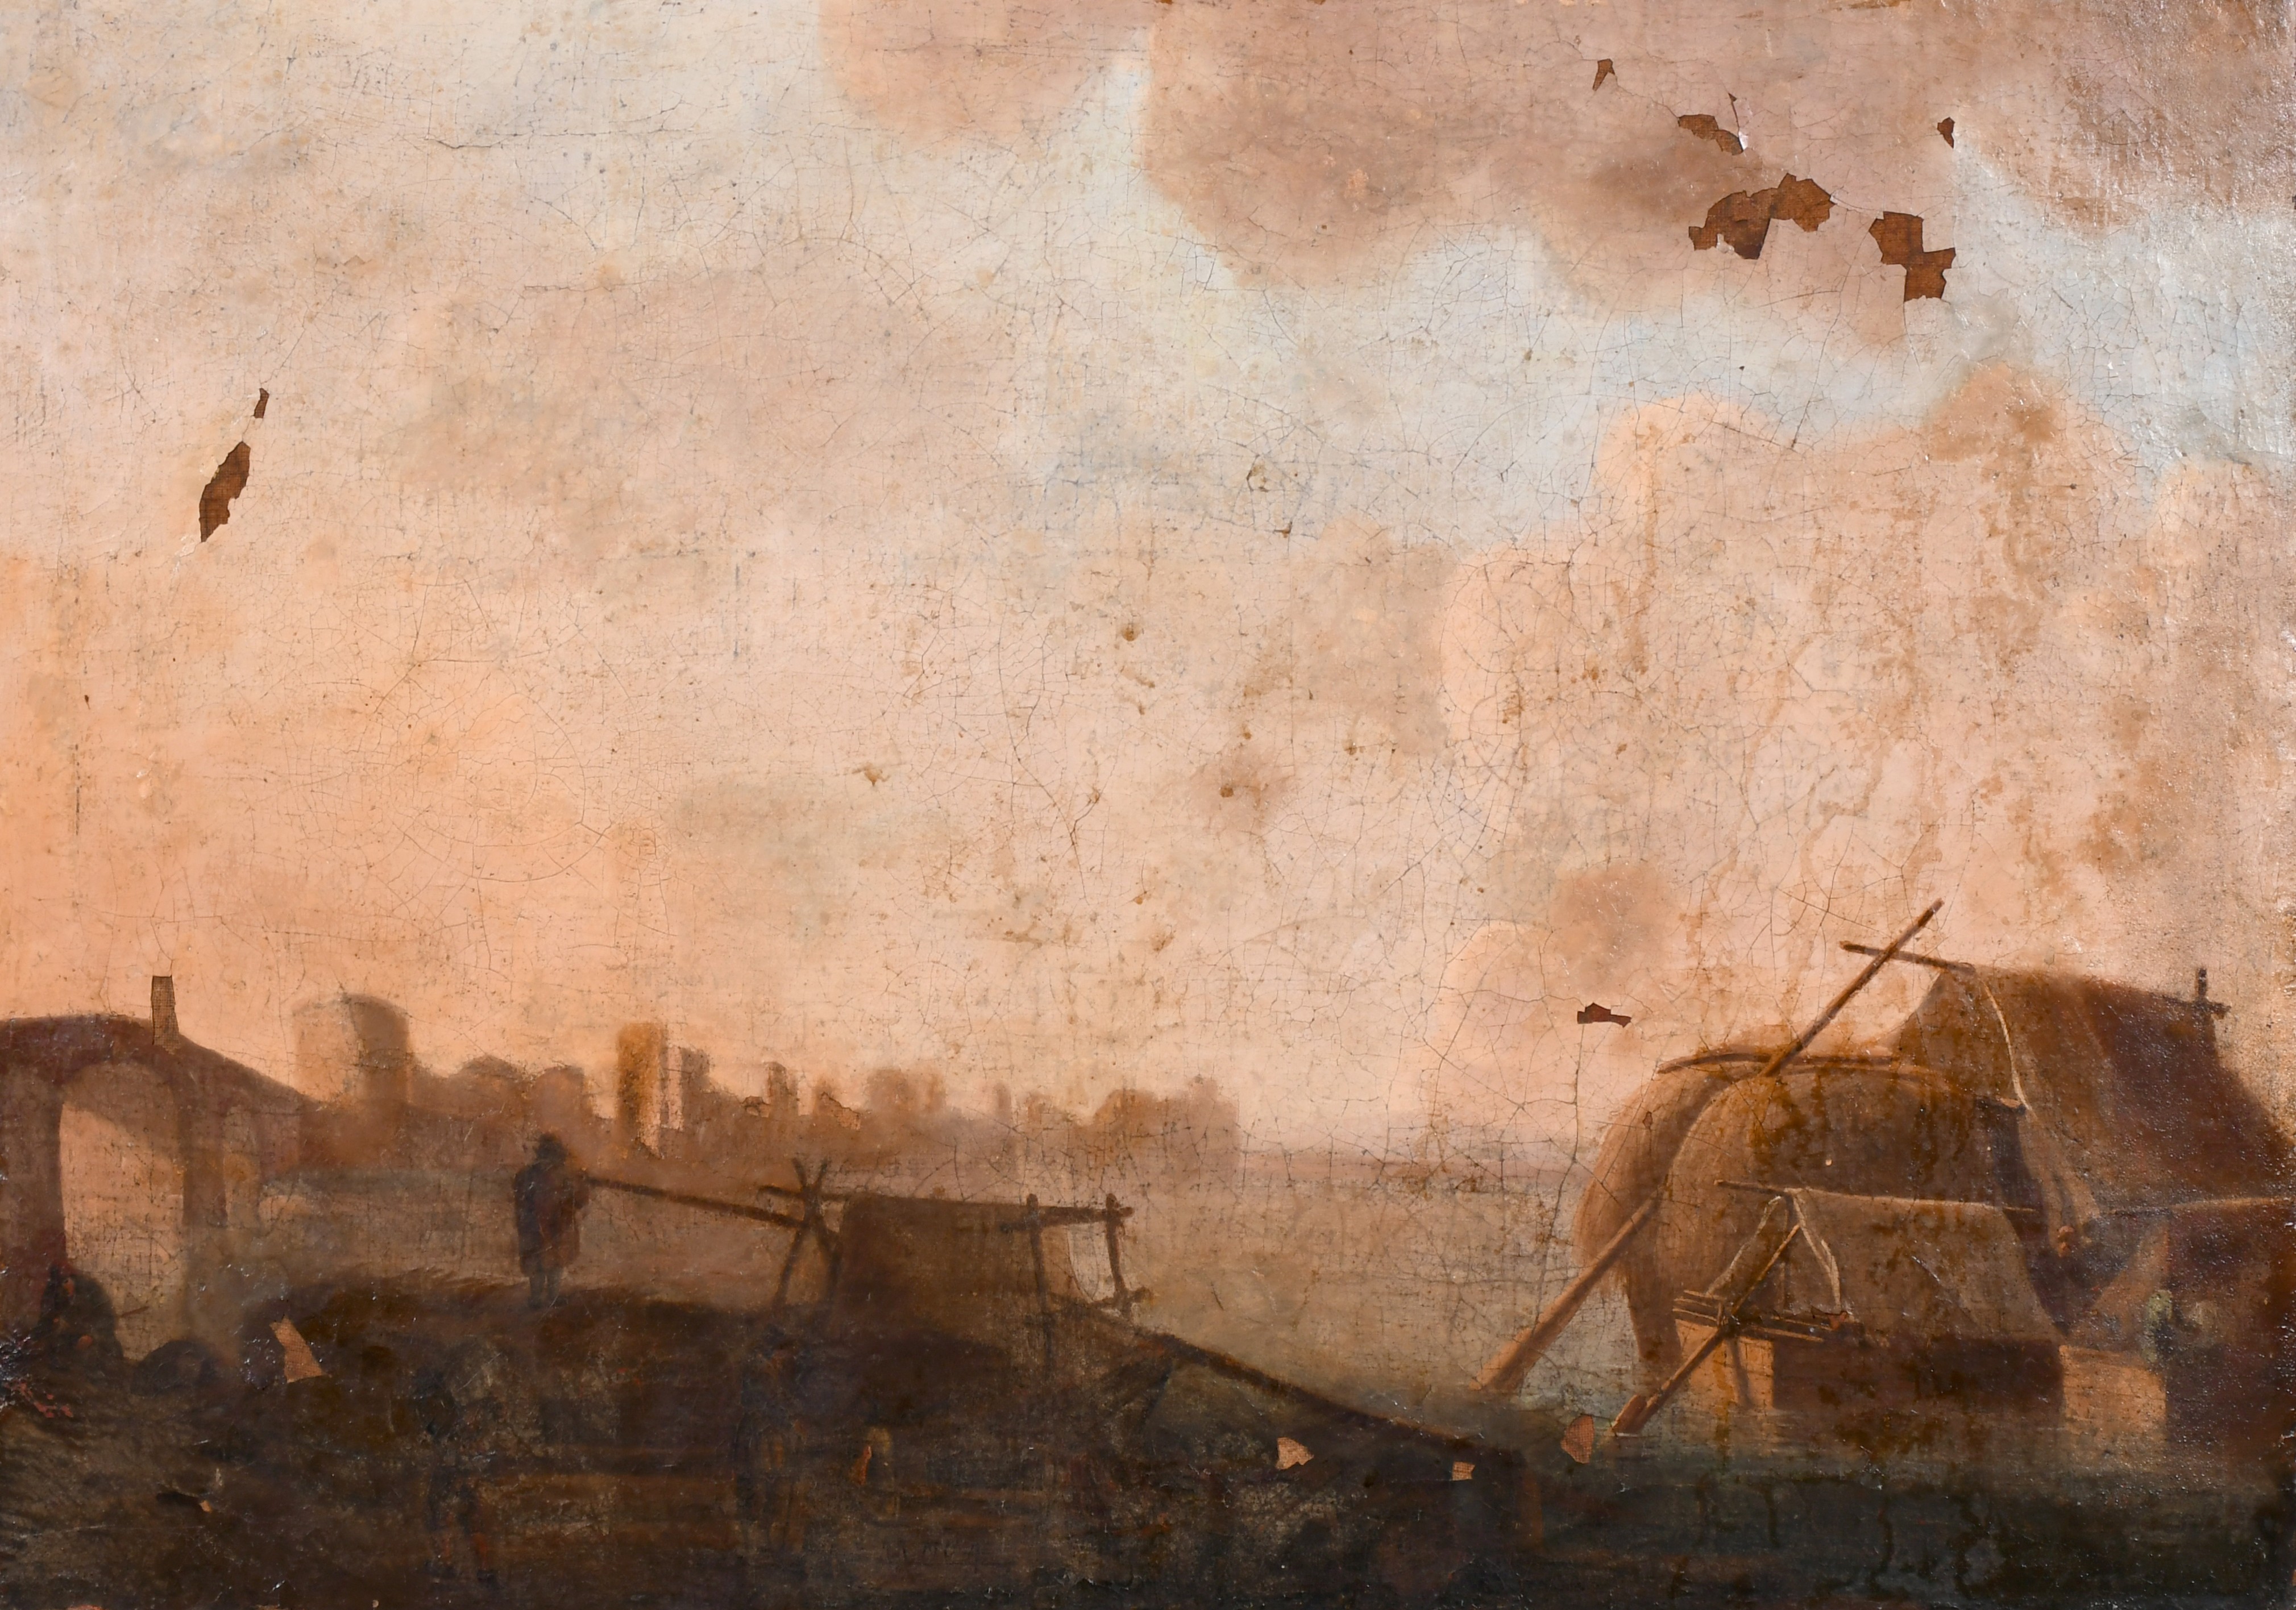 18th Century Dutch School. An Estuary Scene with a Hay Barge, Oil on Canvas, Unframed, 19” x 26.